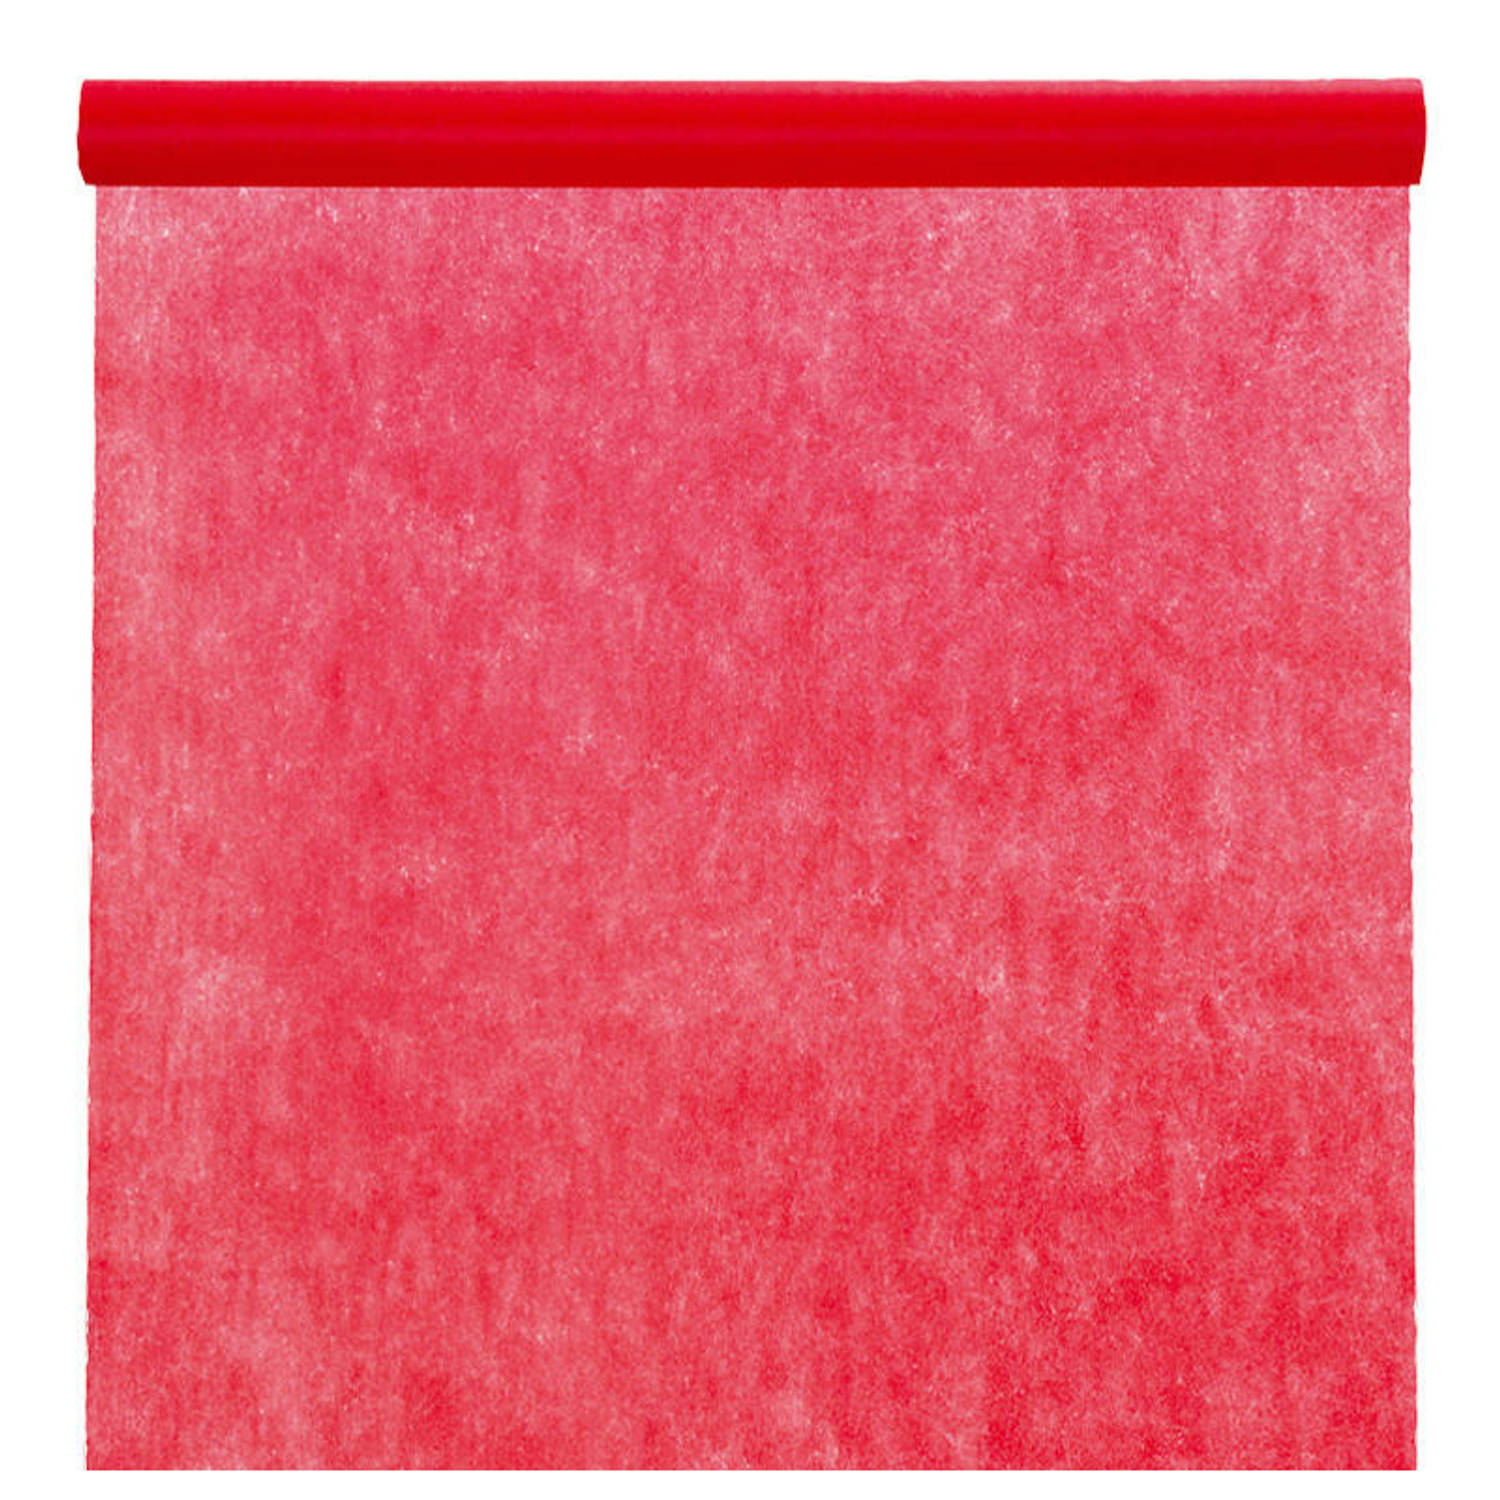 Feest tafelkleed op rol - rood - 120 cm x 10 m - non woven polyester - Feesttafelkleden